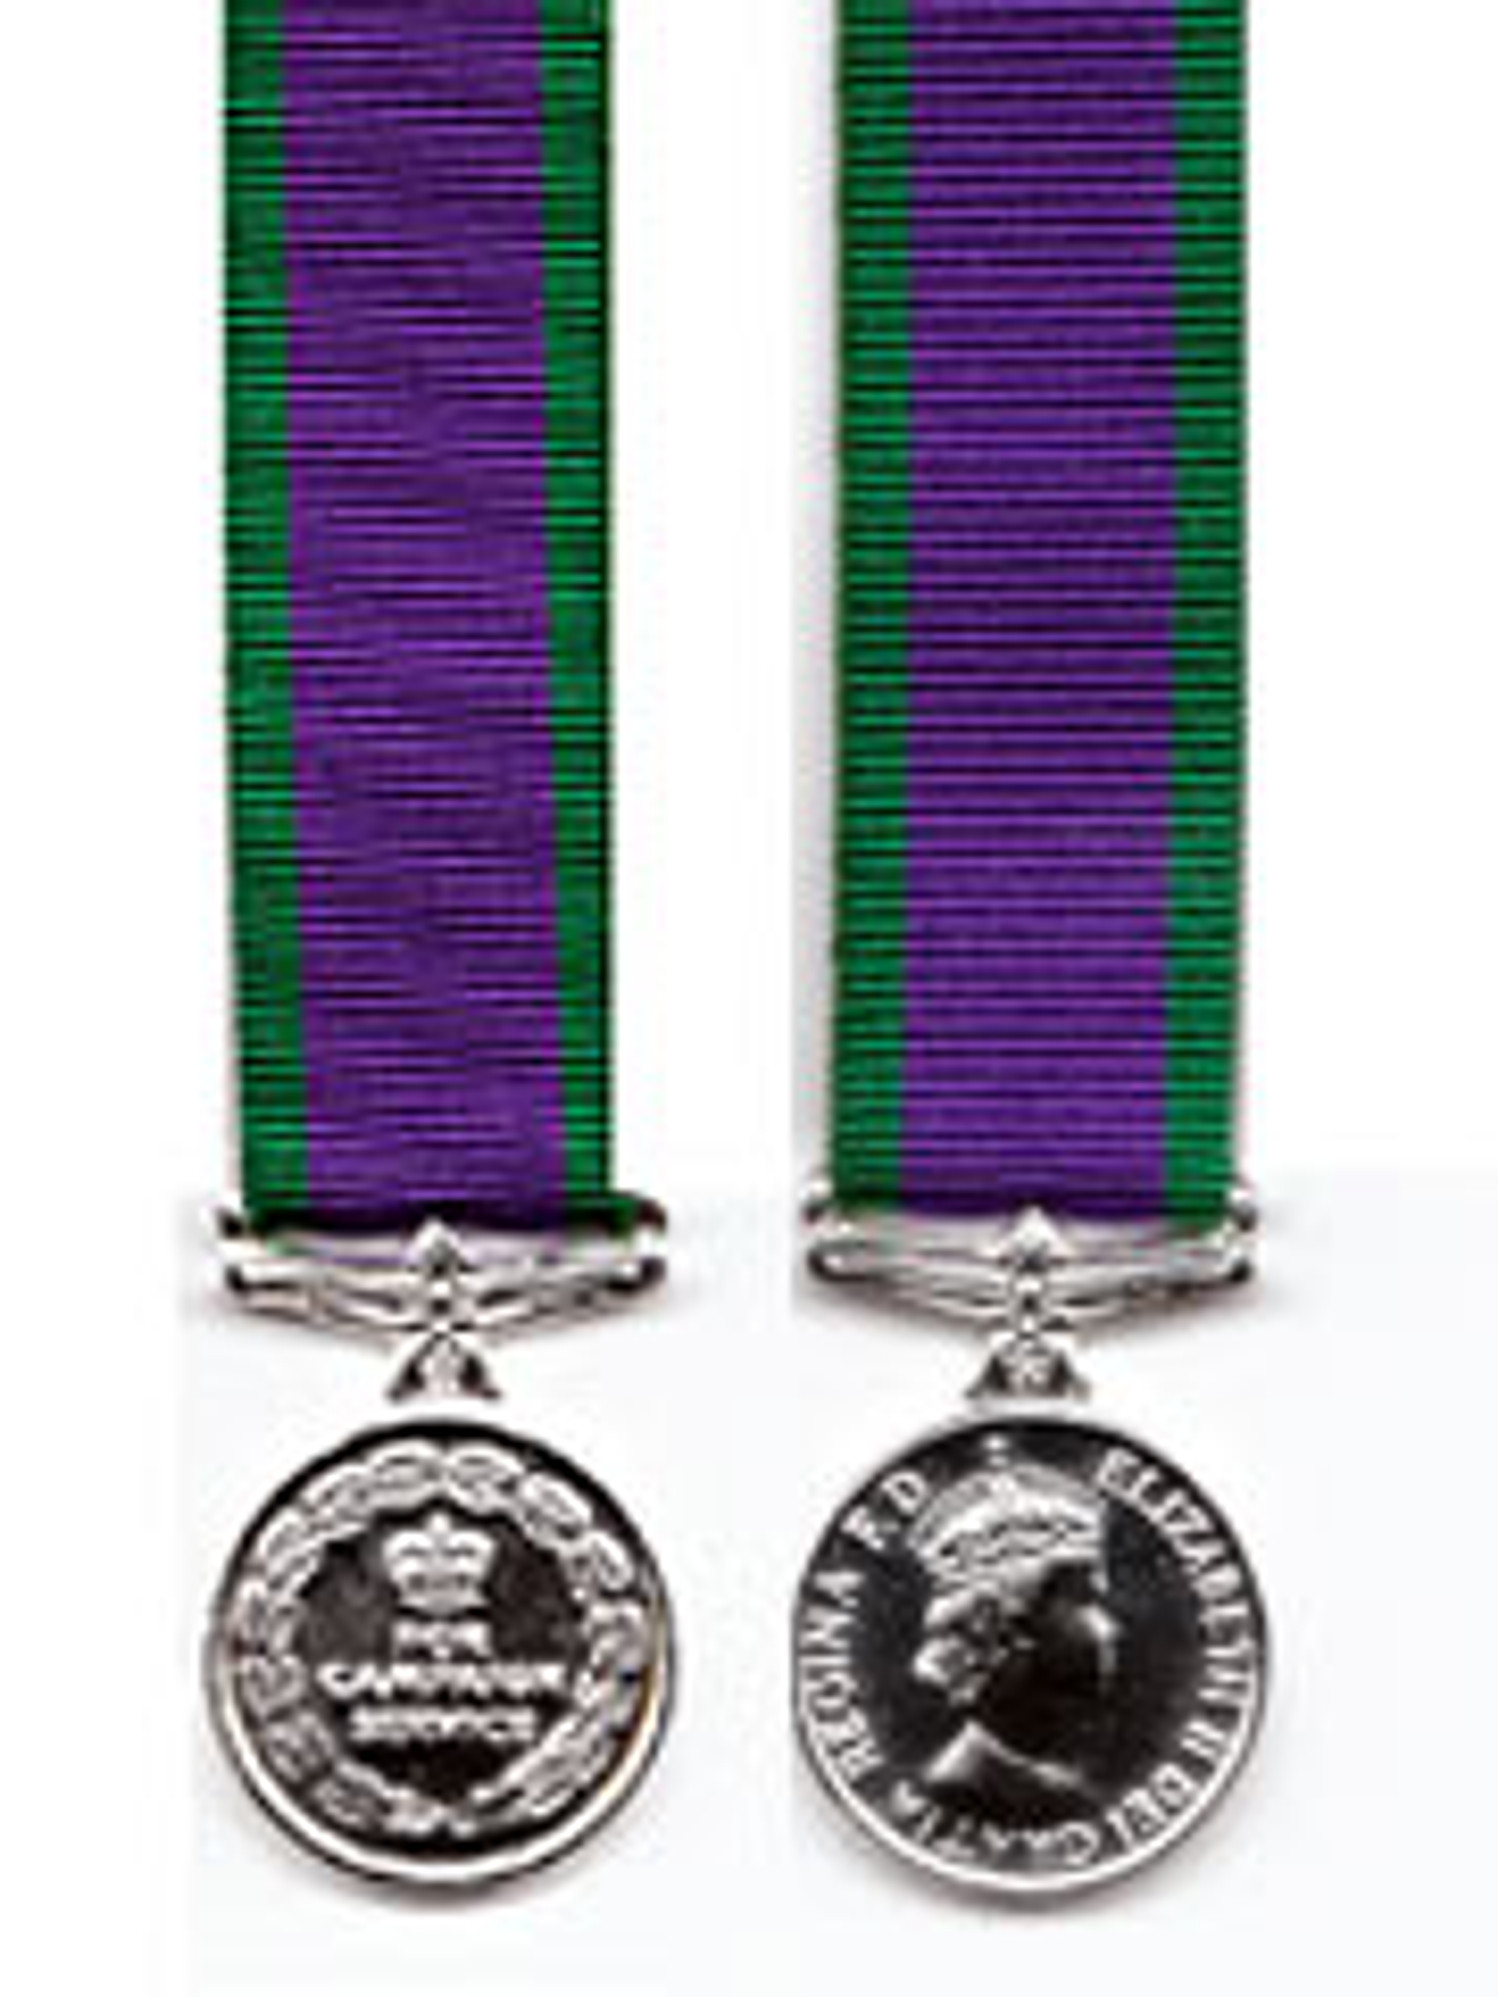 British Campain 1962 Miniature Medal